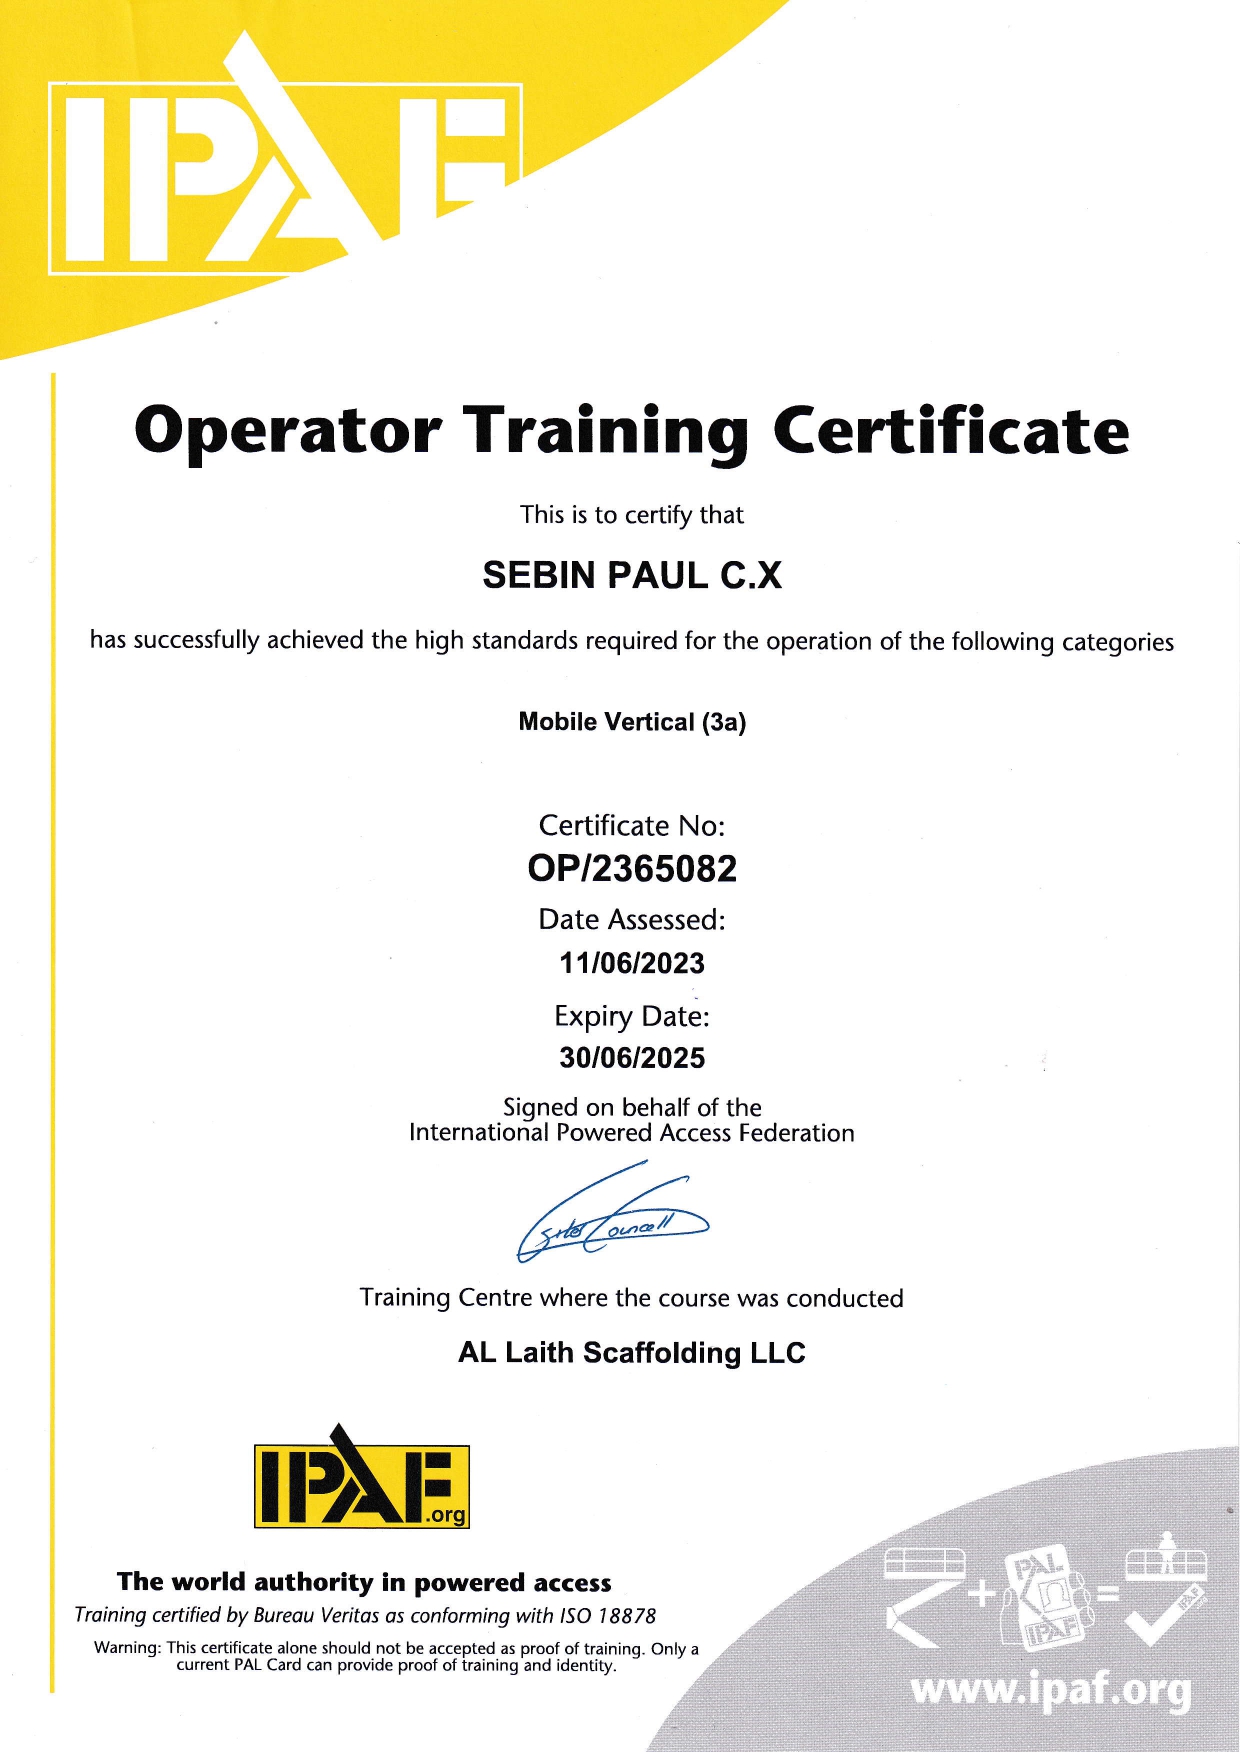 ipaf_training_certificate-2